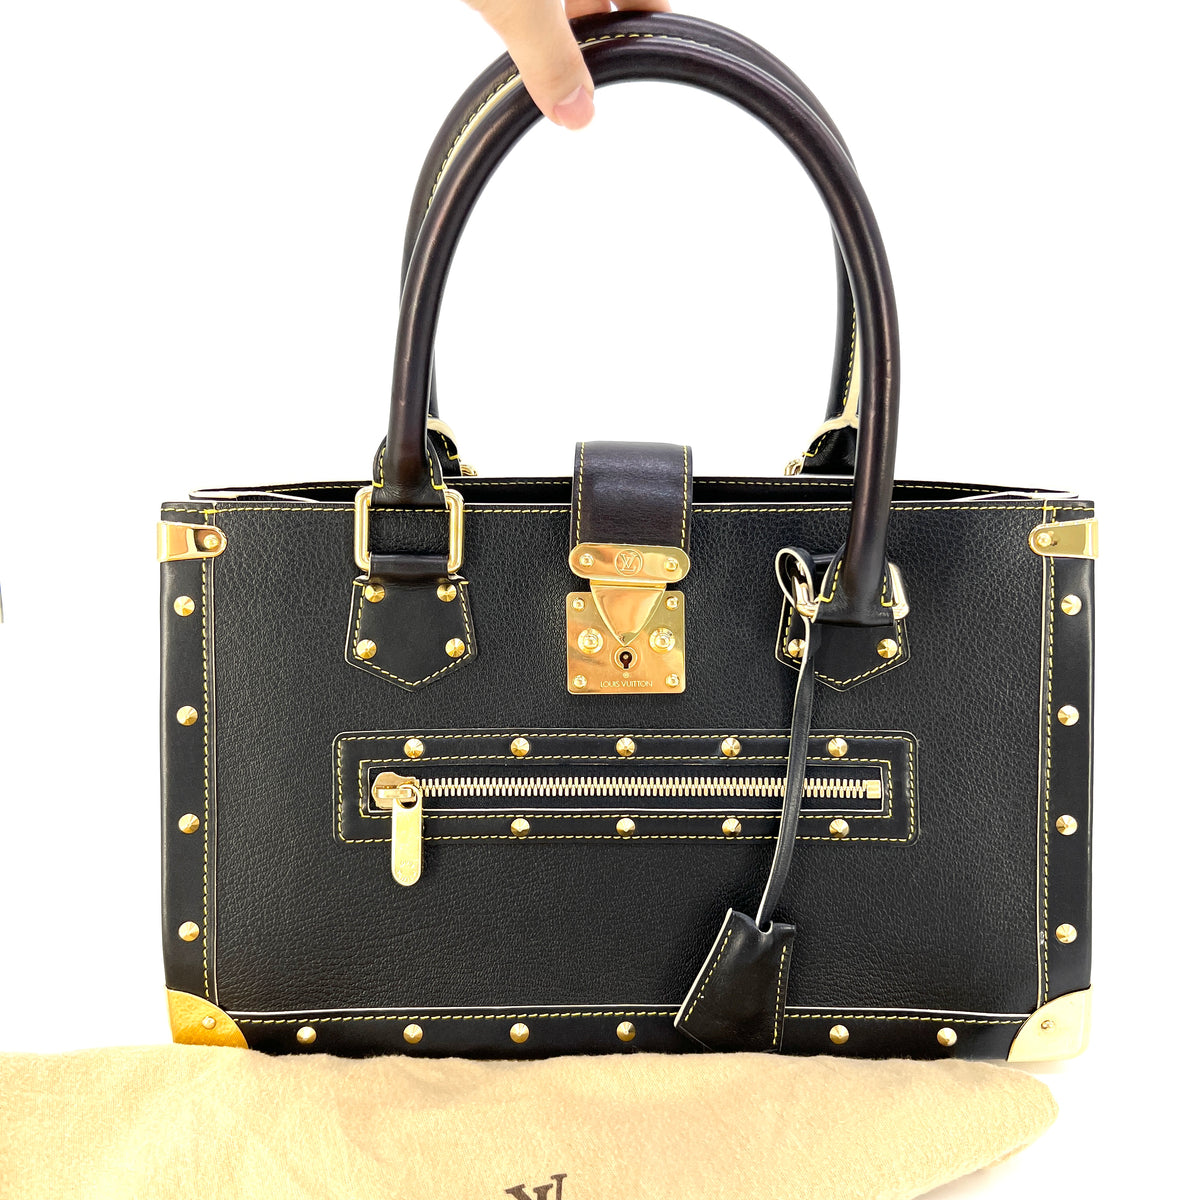 suhali leather handbag